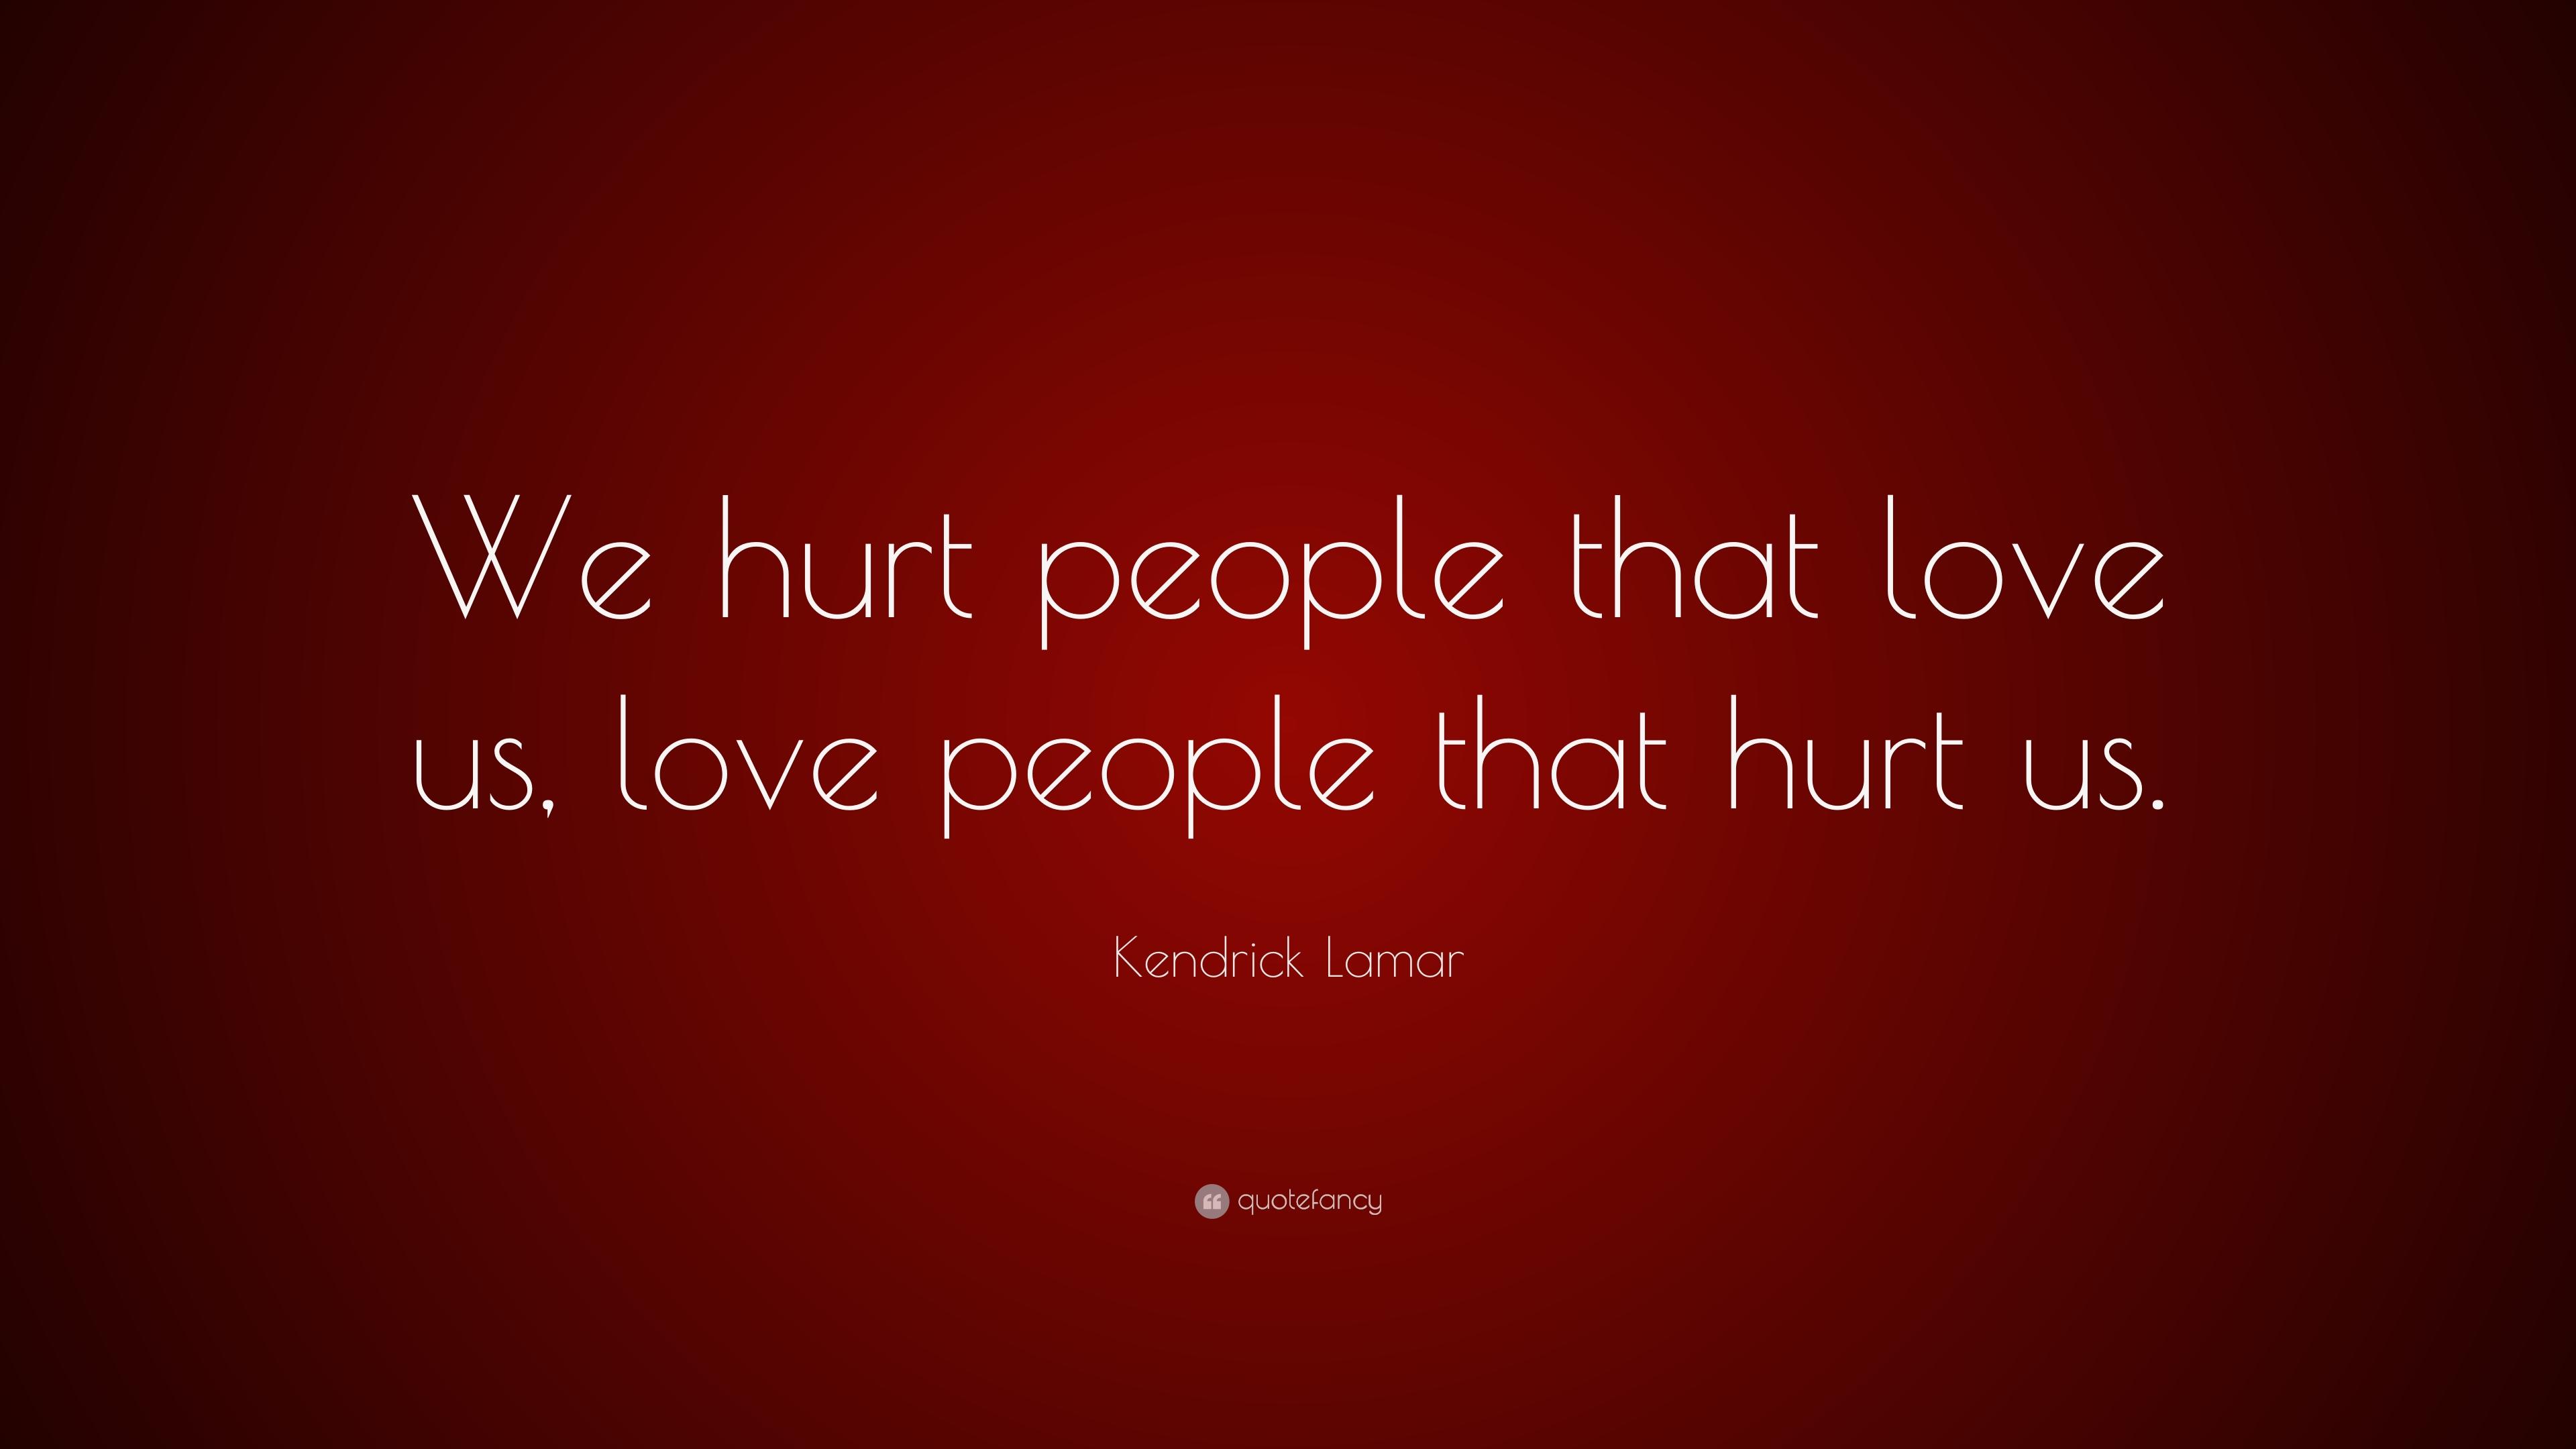 Kendrick Lamar Quote: “We hurt people that love us, love people that